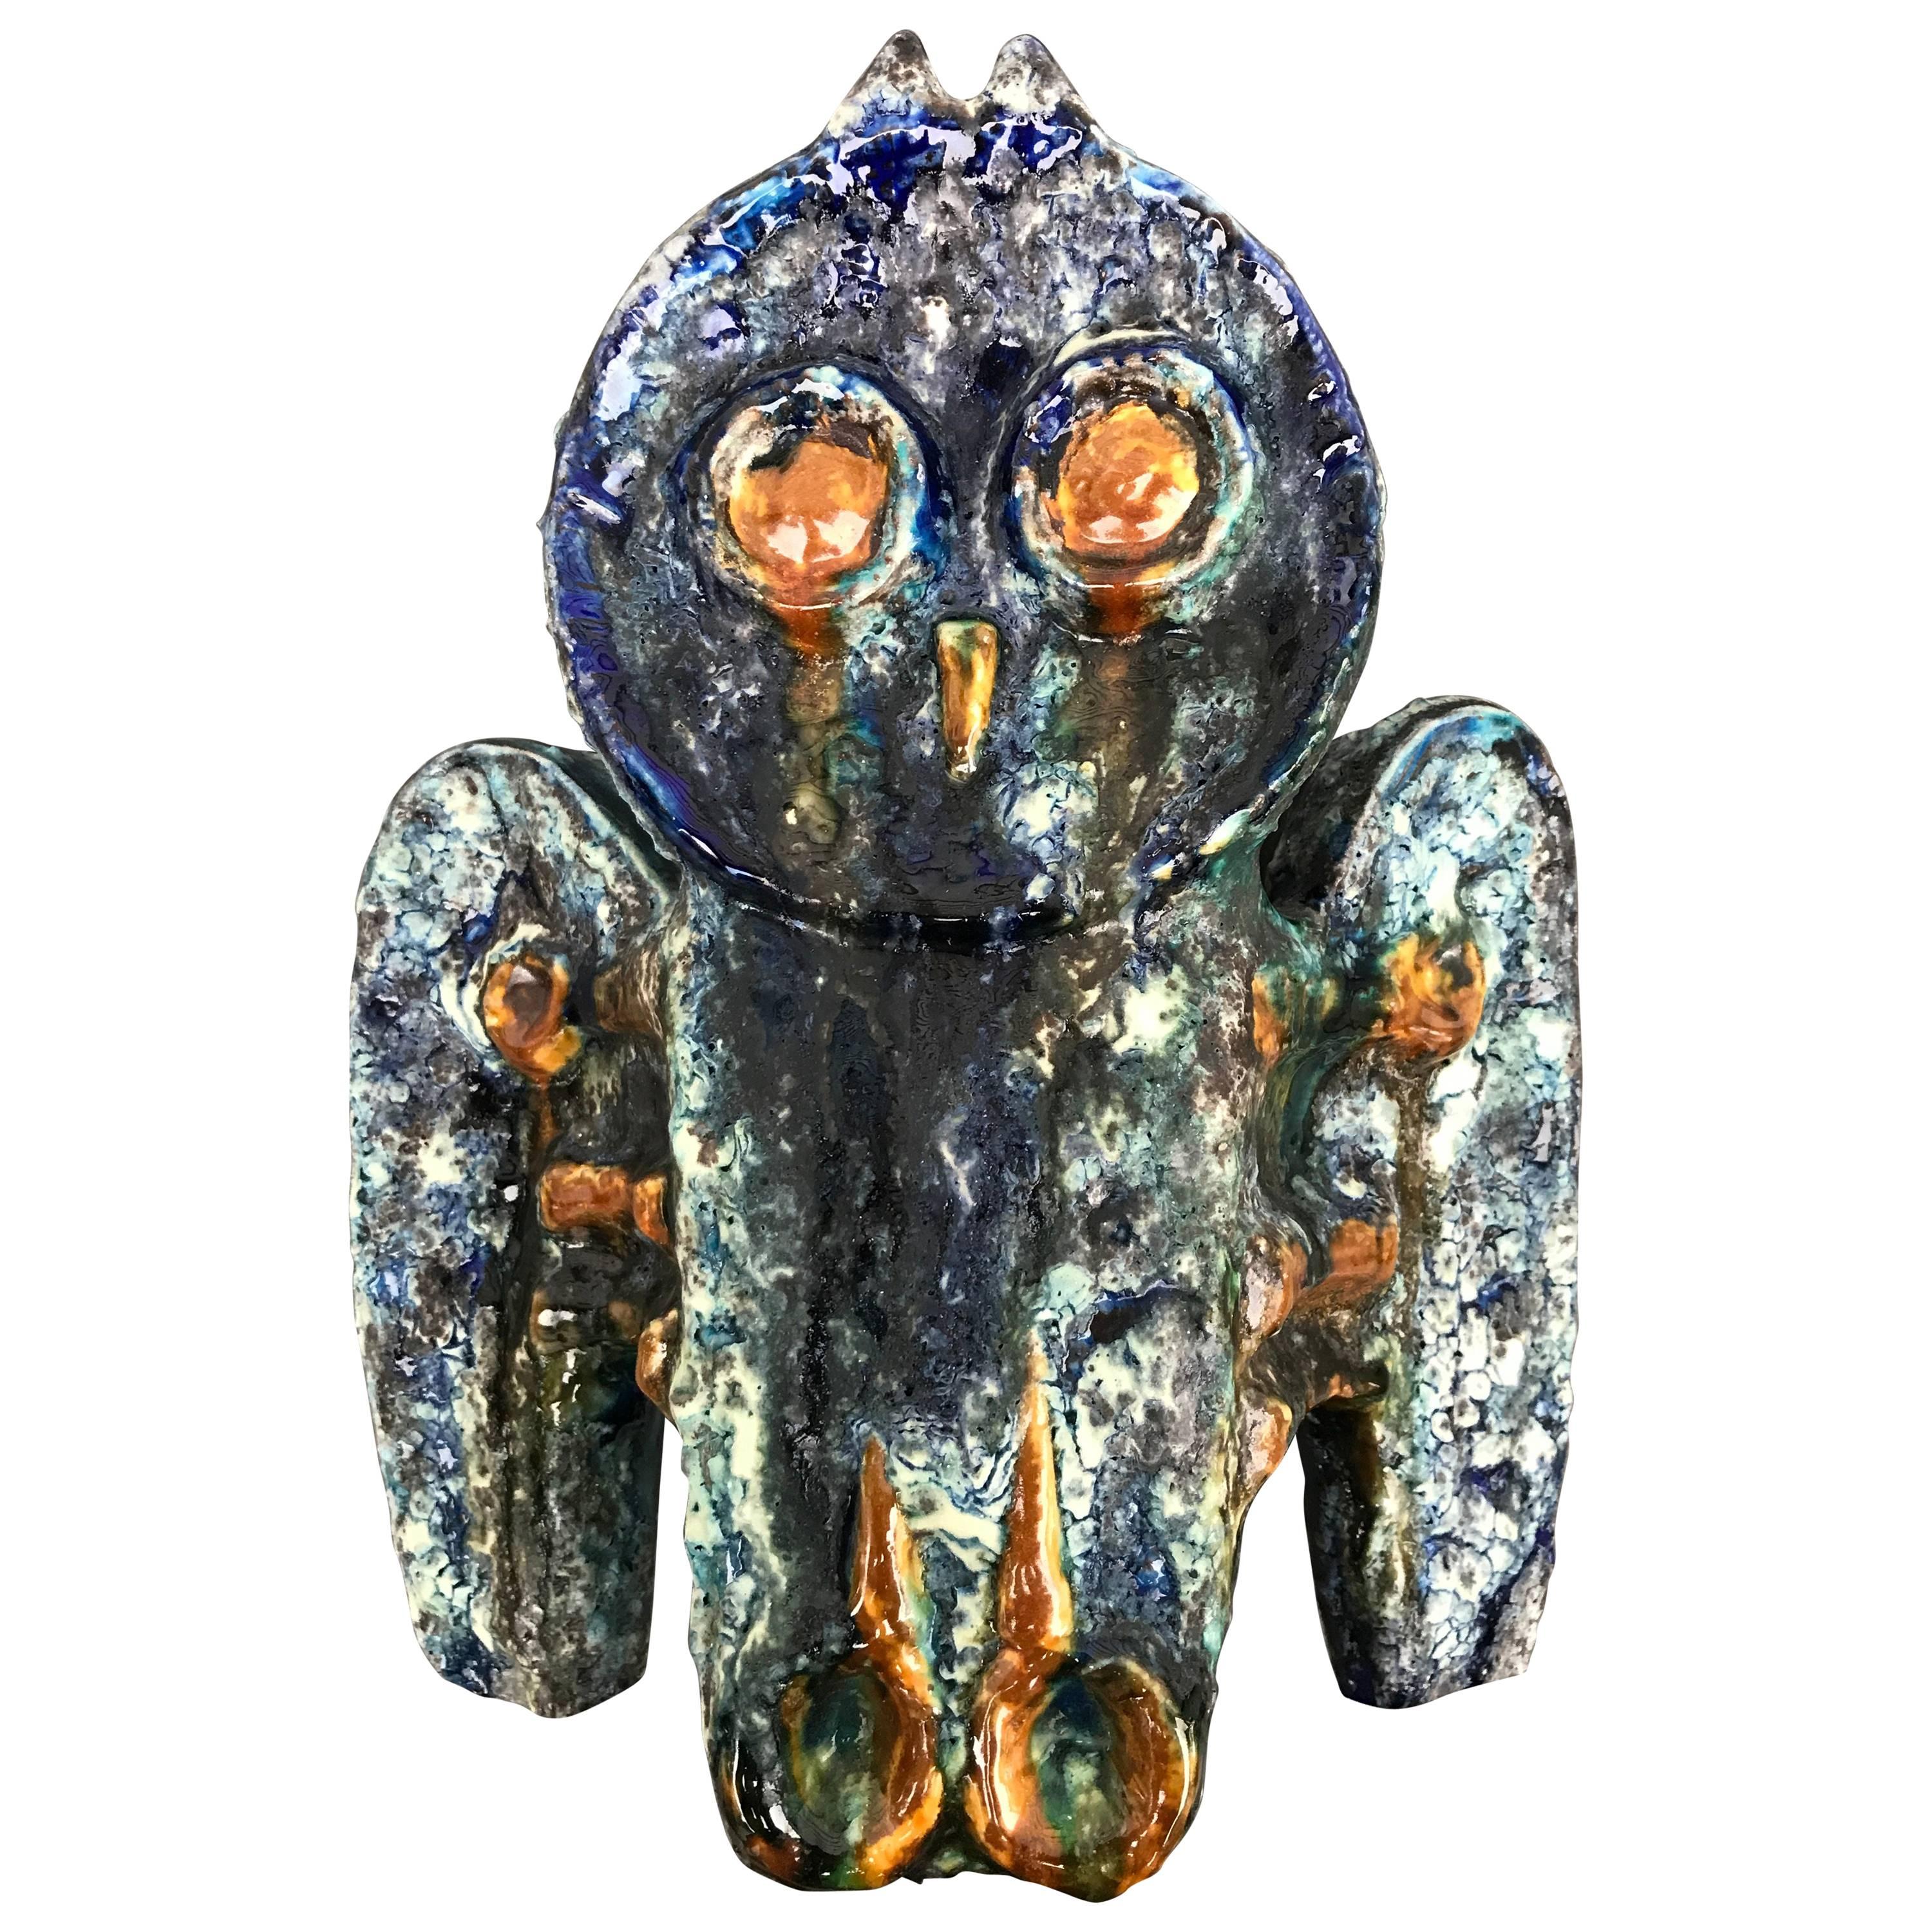 Big Blue Owl Sculpture Handmade and Hand Glazed